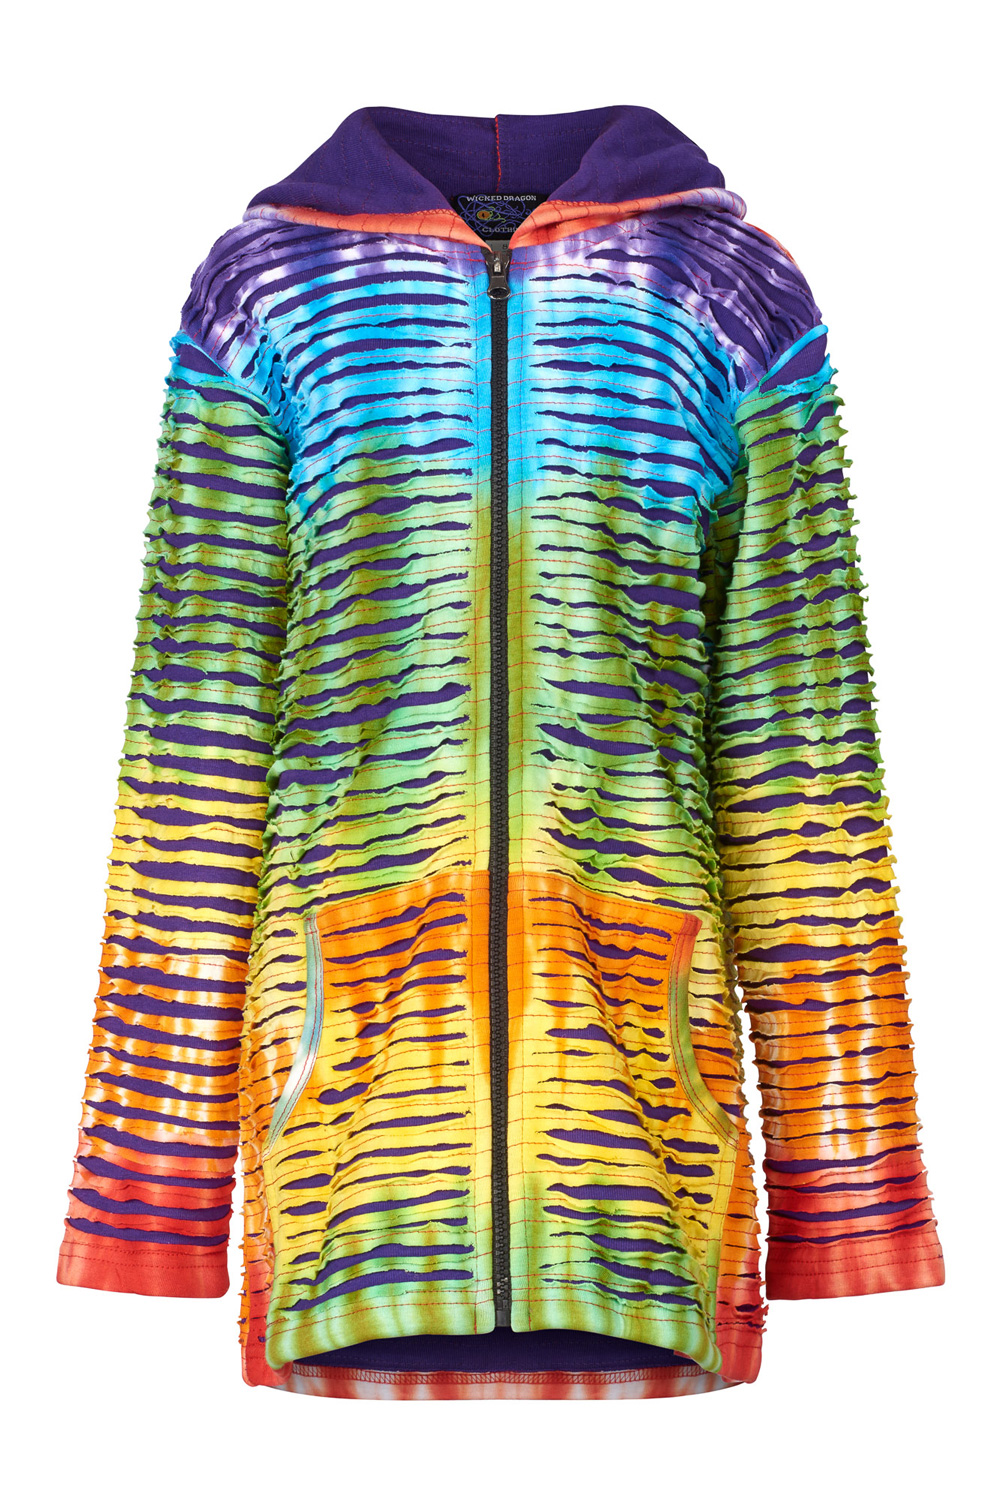 Wicked Dragon Clothing - Children rainbow hippie hooded jacket